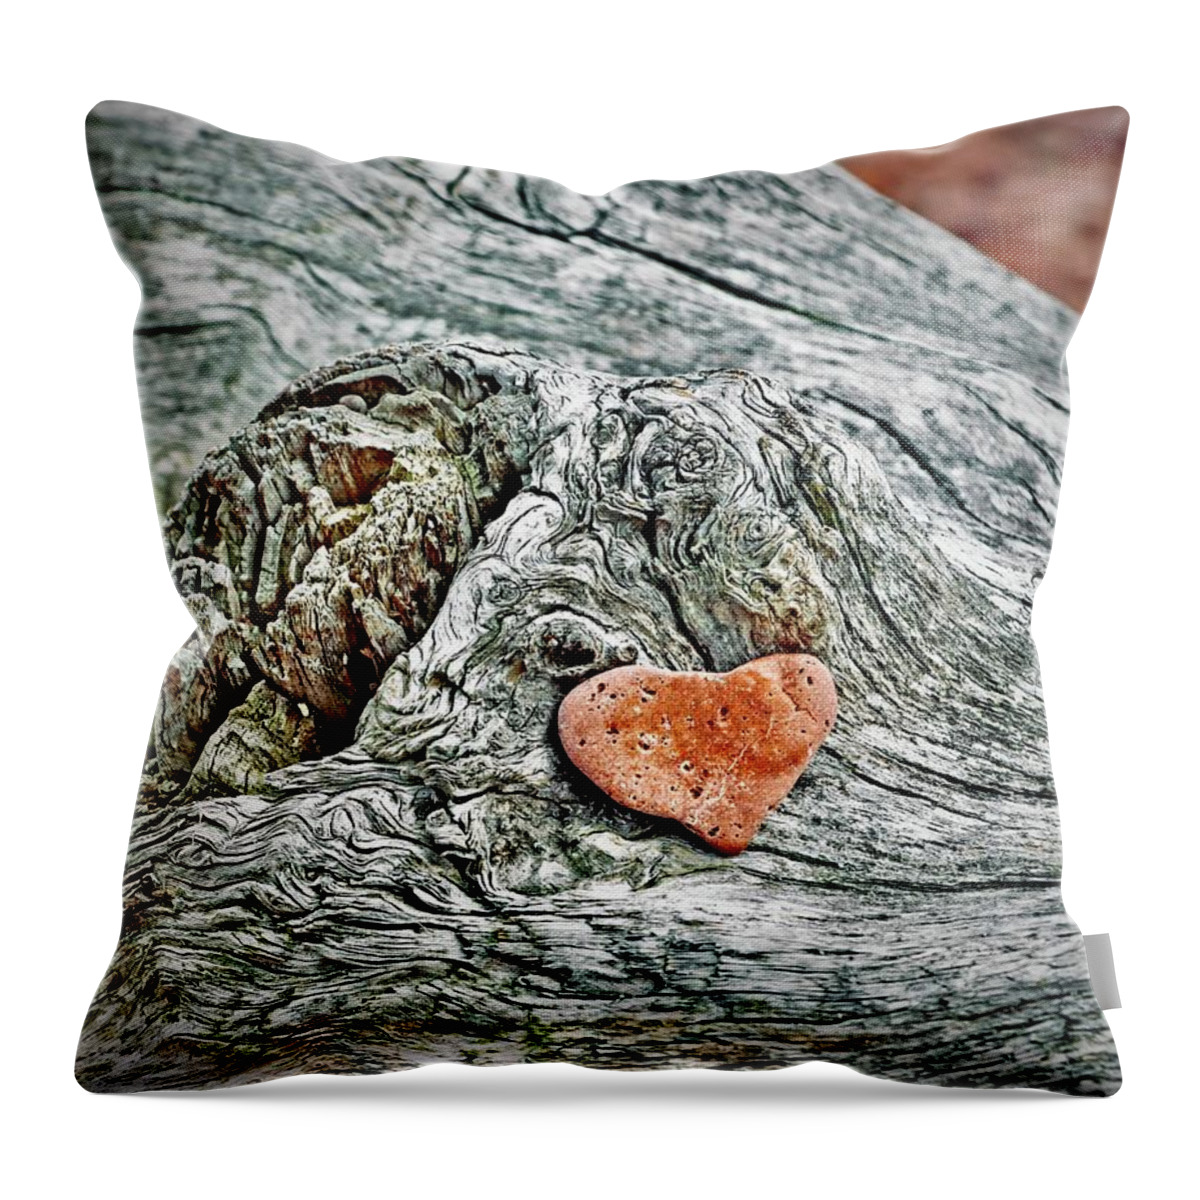 Rock Throw Pillow featuring the photograph Heart Shaped Rock by Sarah Lilja